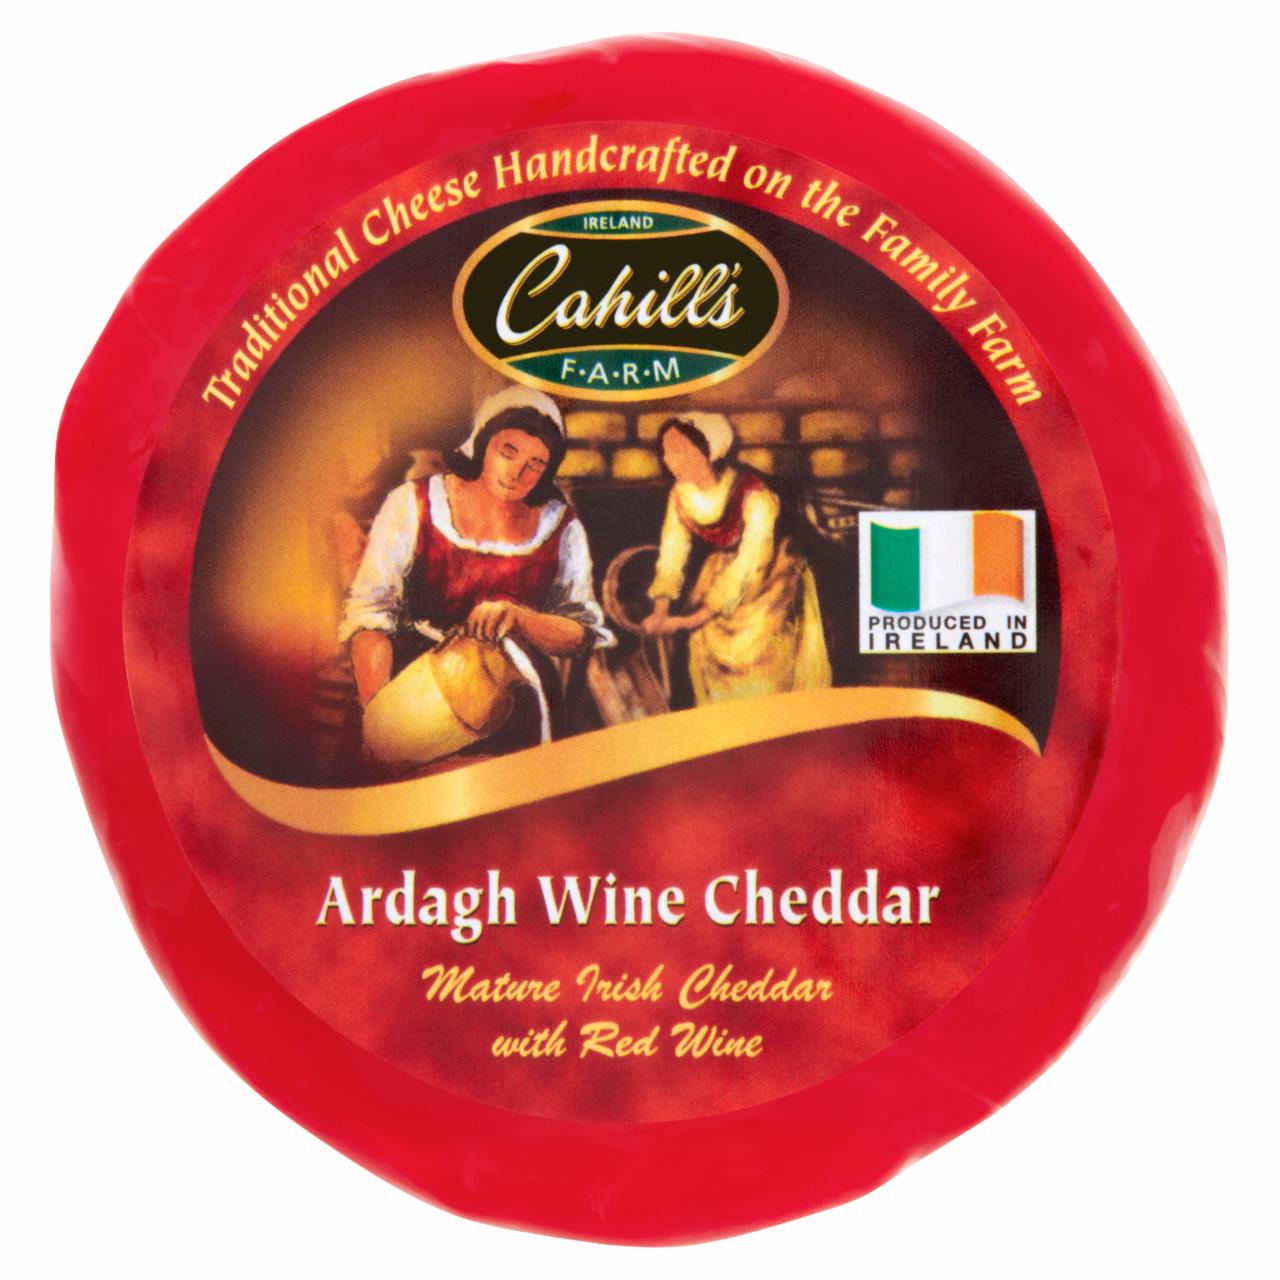 Képek - Cahill's Farm Ardagh Wine Cheddar kemény zsíros vörösboros sajt 200 g